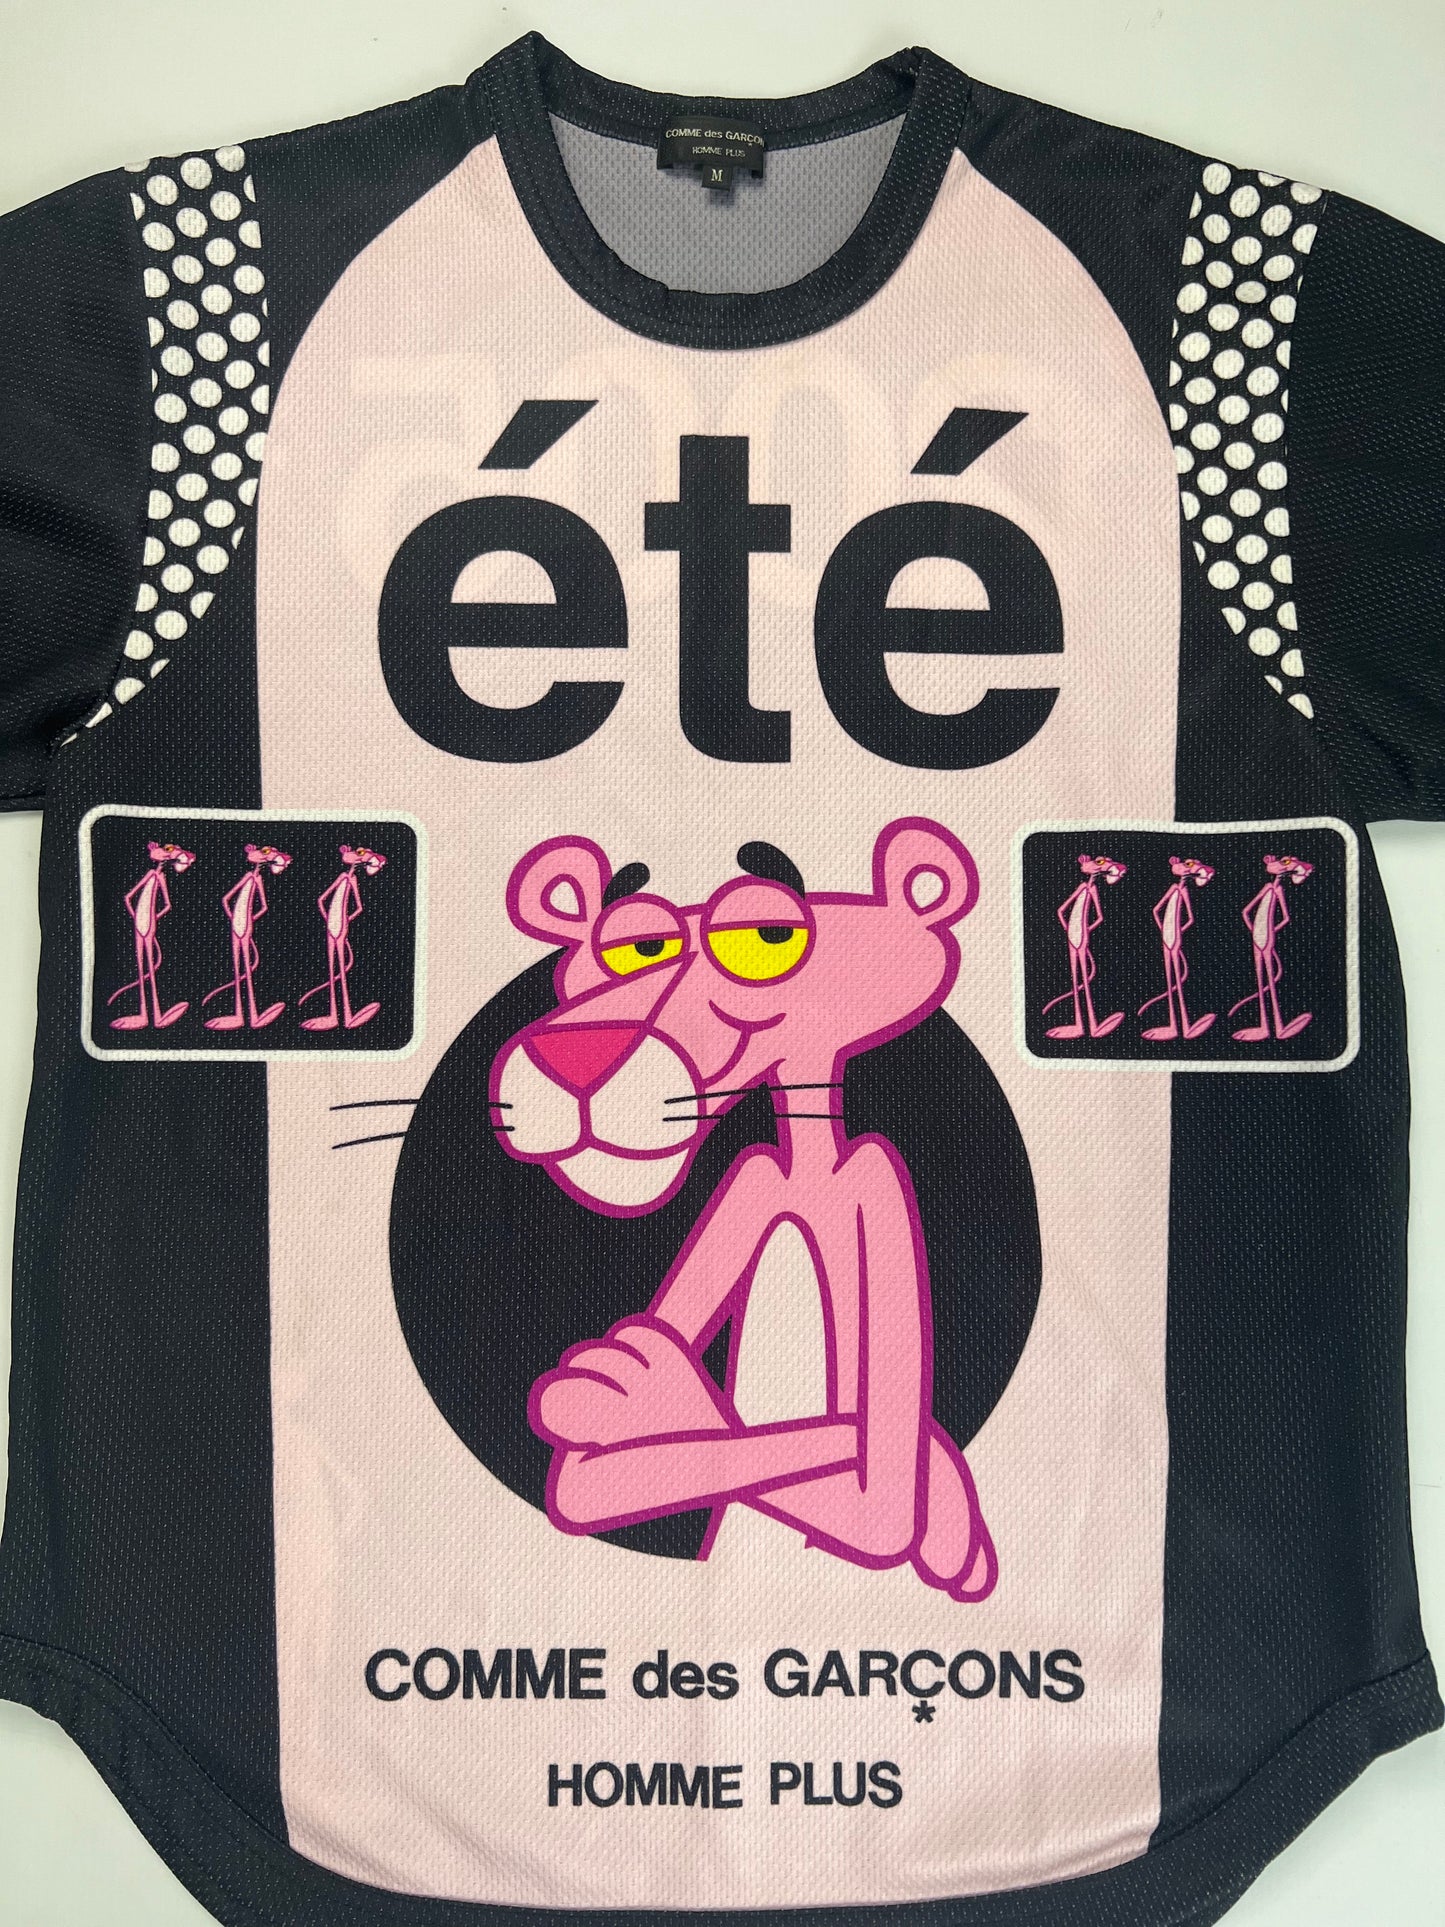 CDG SS05 Pink panther cycling tee shirt SZ:M